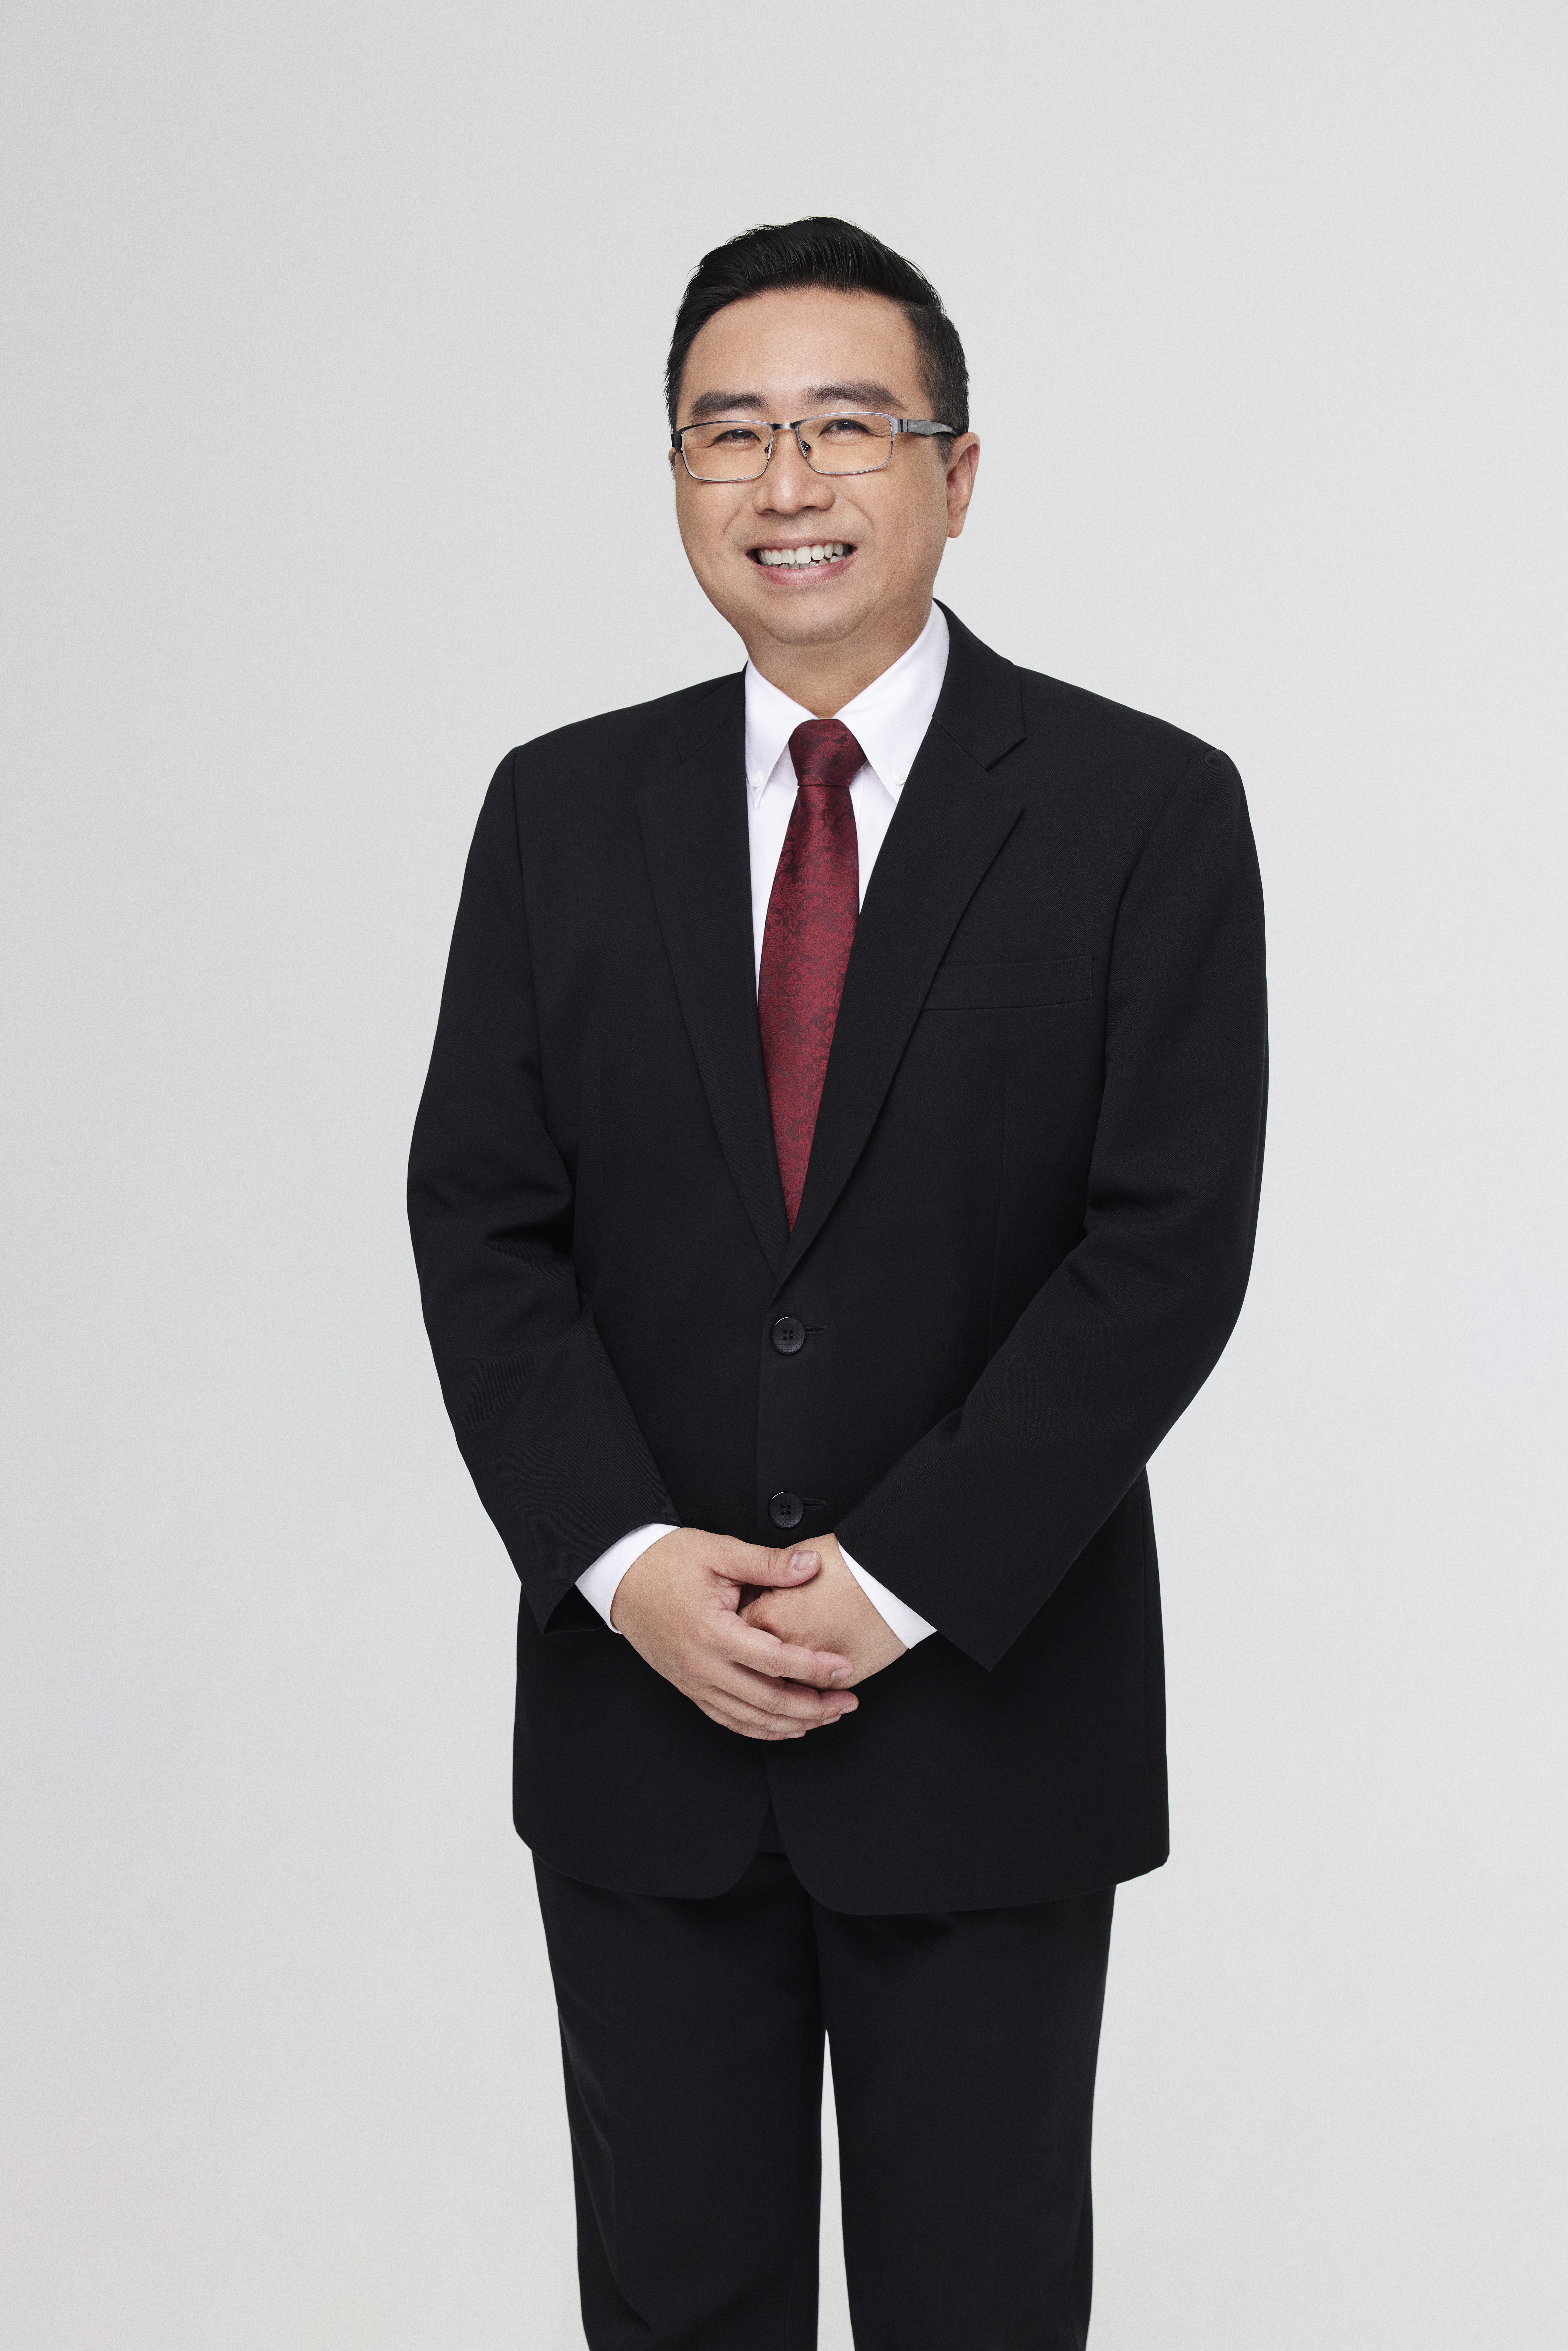 Yb-tuan-chang-lih-kang-minister-of-science-technology-and-innovation